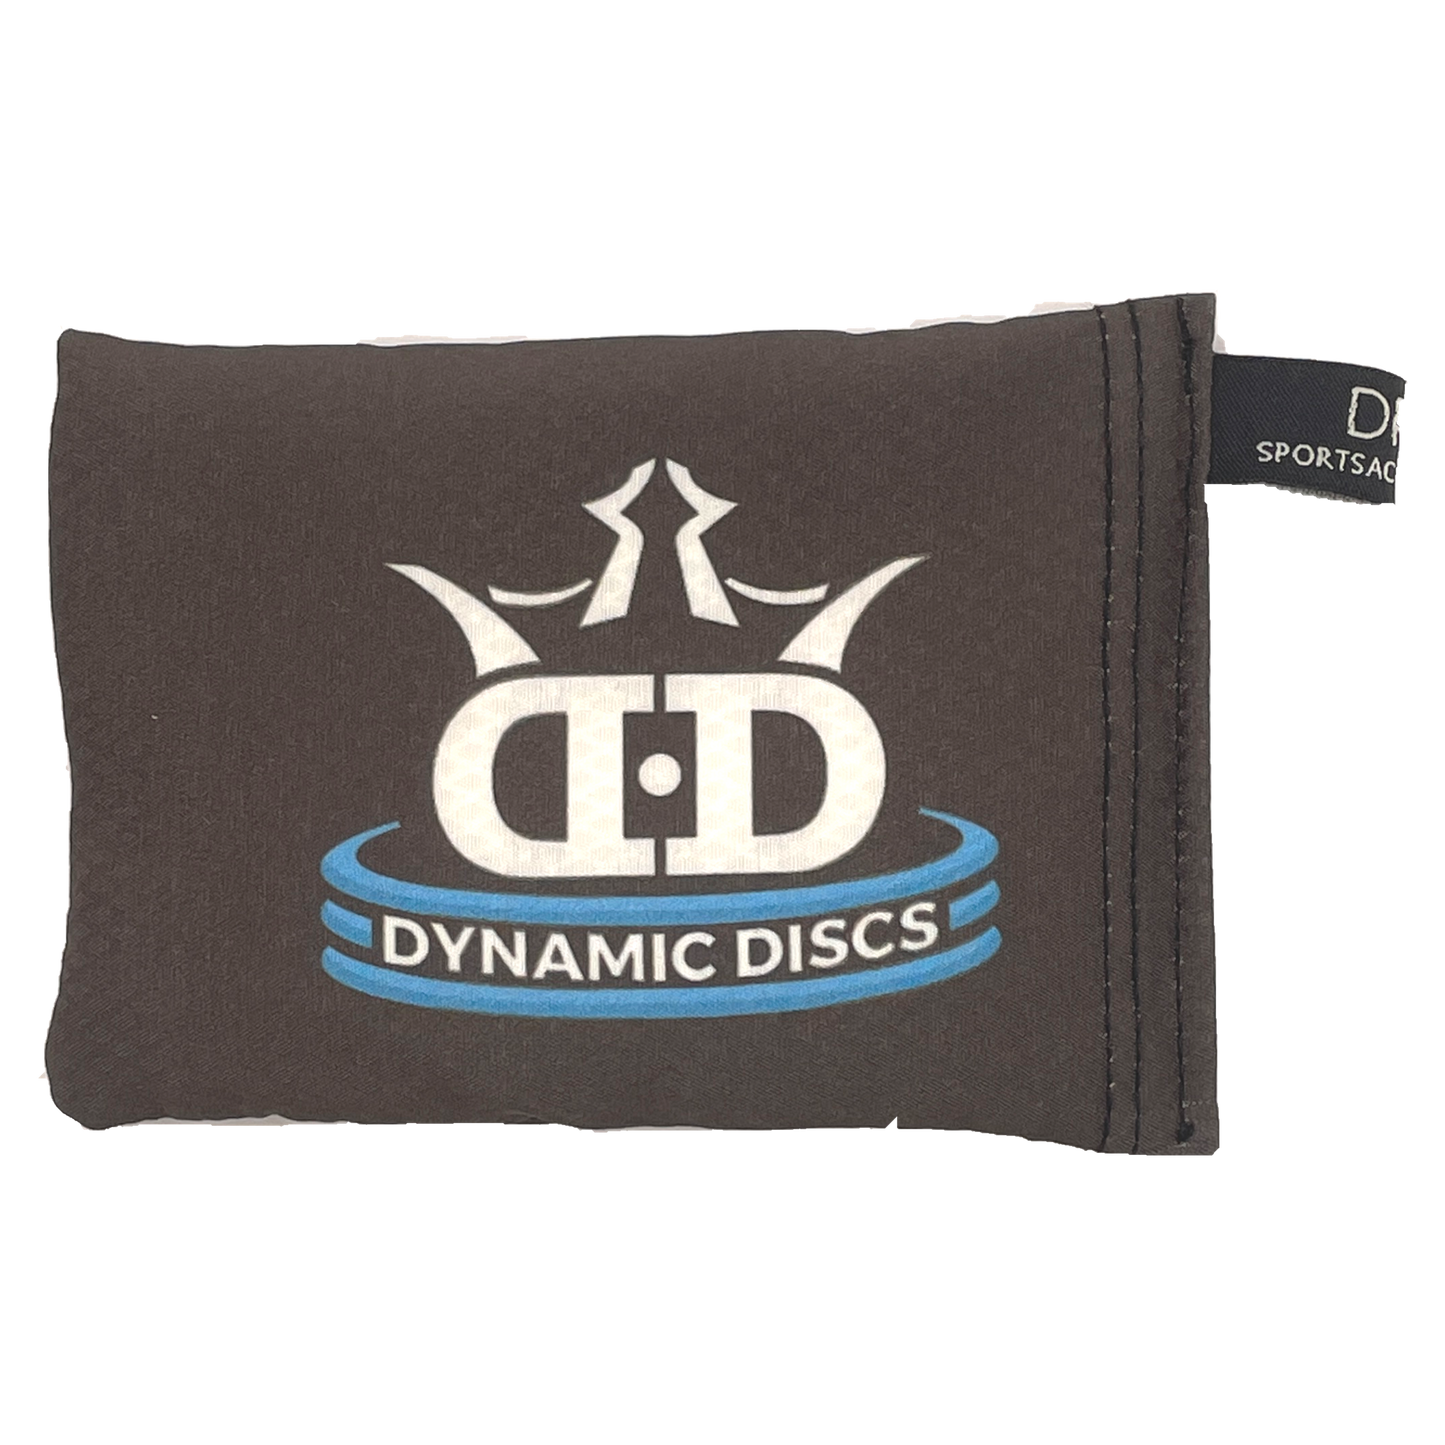 Dynamic Discs Sportsack - Original Logo - Hand Drying Product